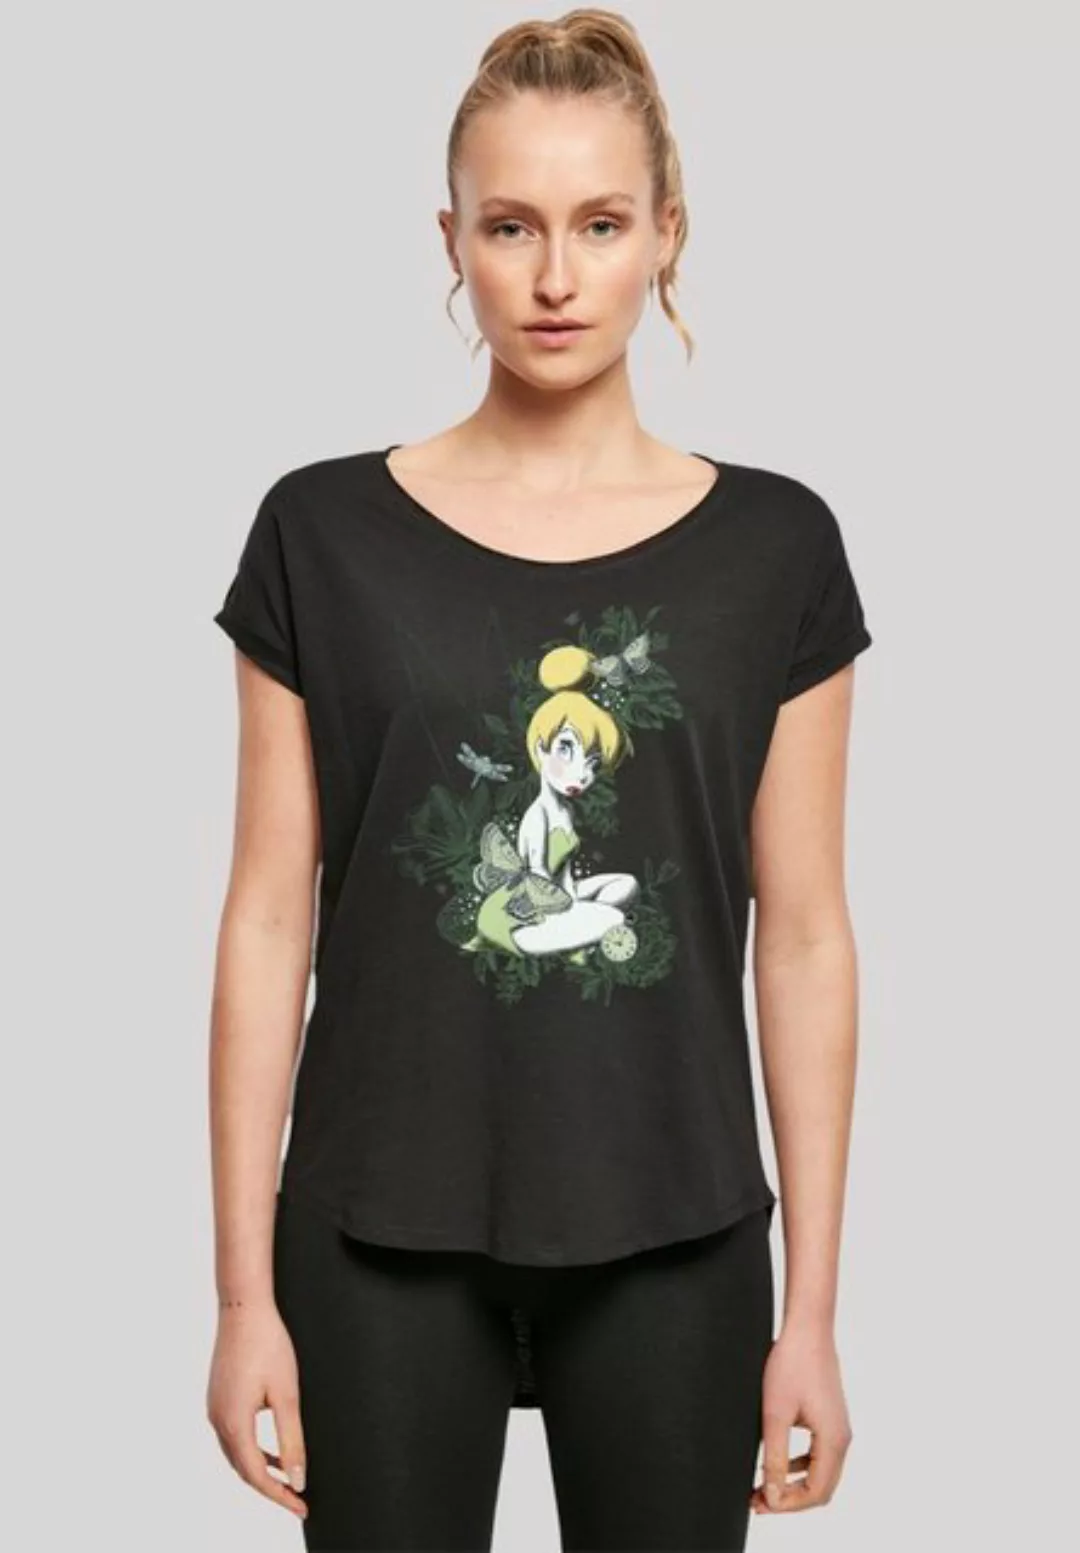 F4NT4STIC T-Shirt Disney Peter Pan Fairy Good Life Premium Qualität günstig online kaufen